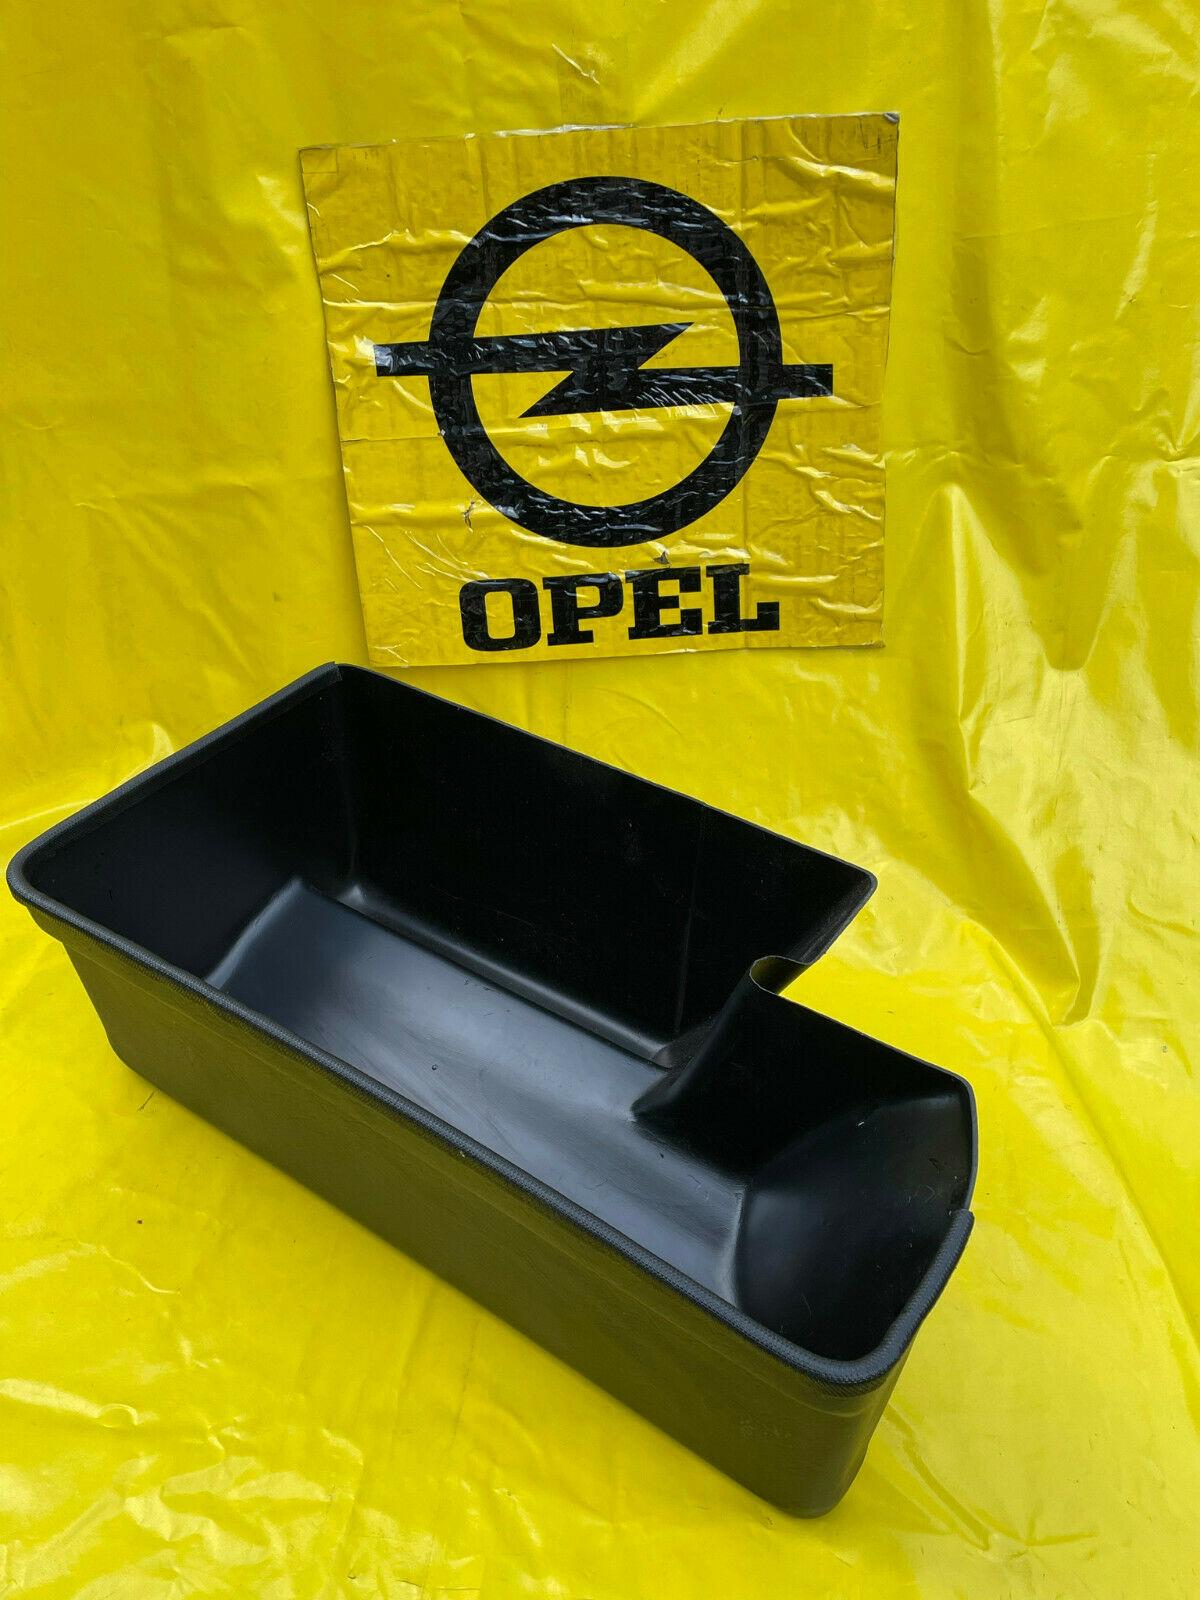 NEU + ORIGINAL Opel Manta B Kofferraumwanne Box Aufbewahrung Kiste